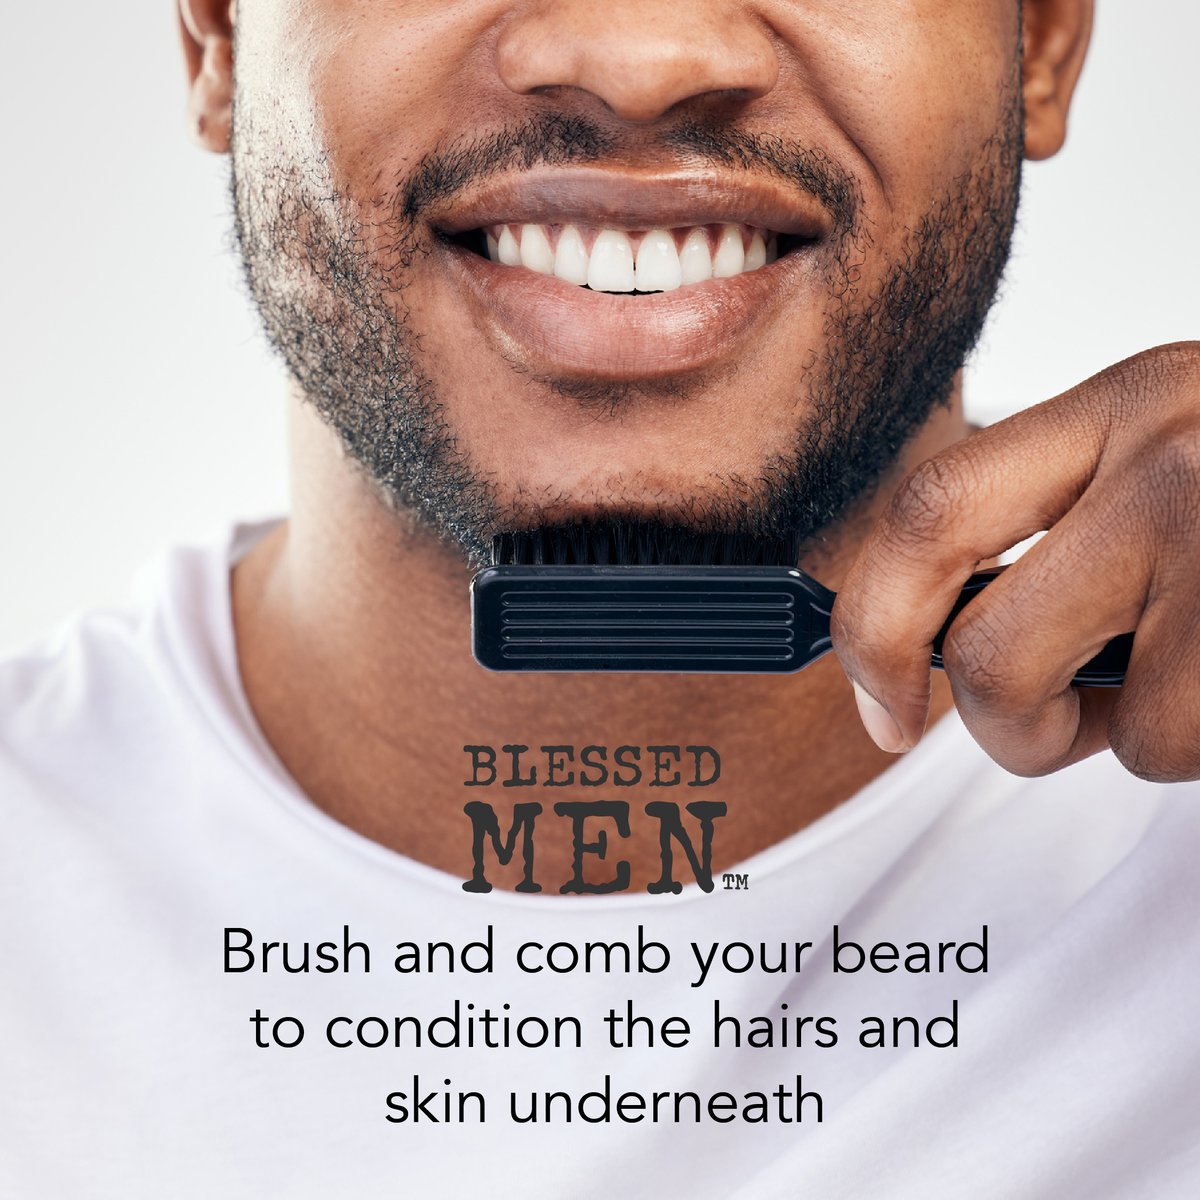 Here are some tips to keep your beard feeling nice!
.
.
#Vegan #Beard #BeardBalm #BeardOil #BeardCare #MensGrooming #VeganSkincare #MansBestFriend #BeardSzn #BarberGang #RazorBumpTreatment #WolfsBane #VeganLove #MarchMadness #FYP #CrueltyFree #BeardTutorial #BeardKing #Bearded